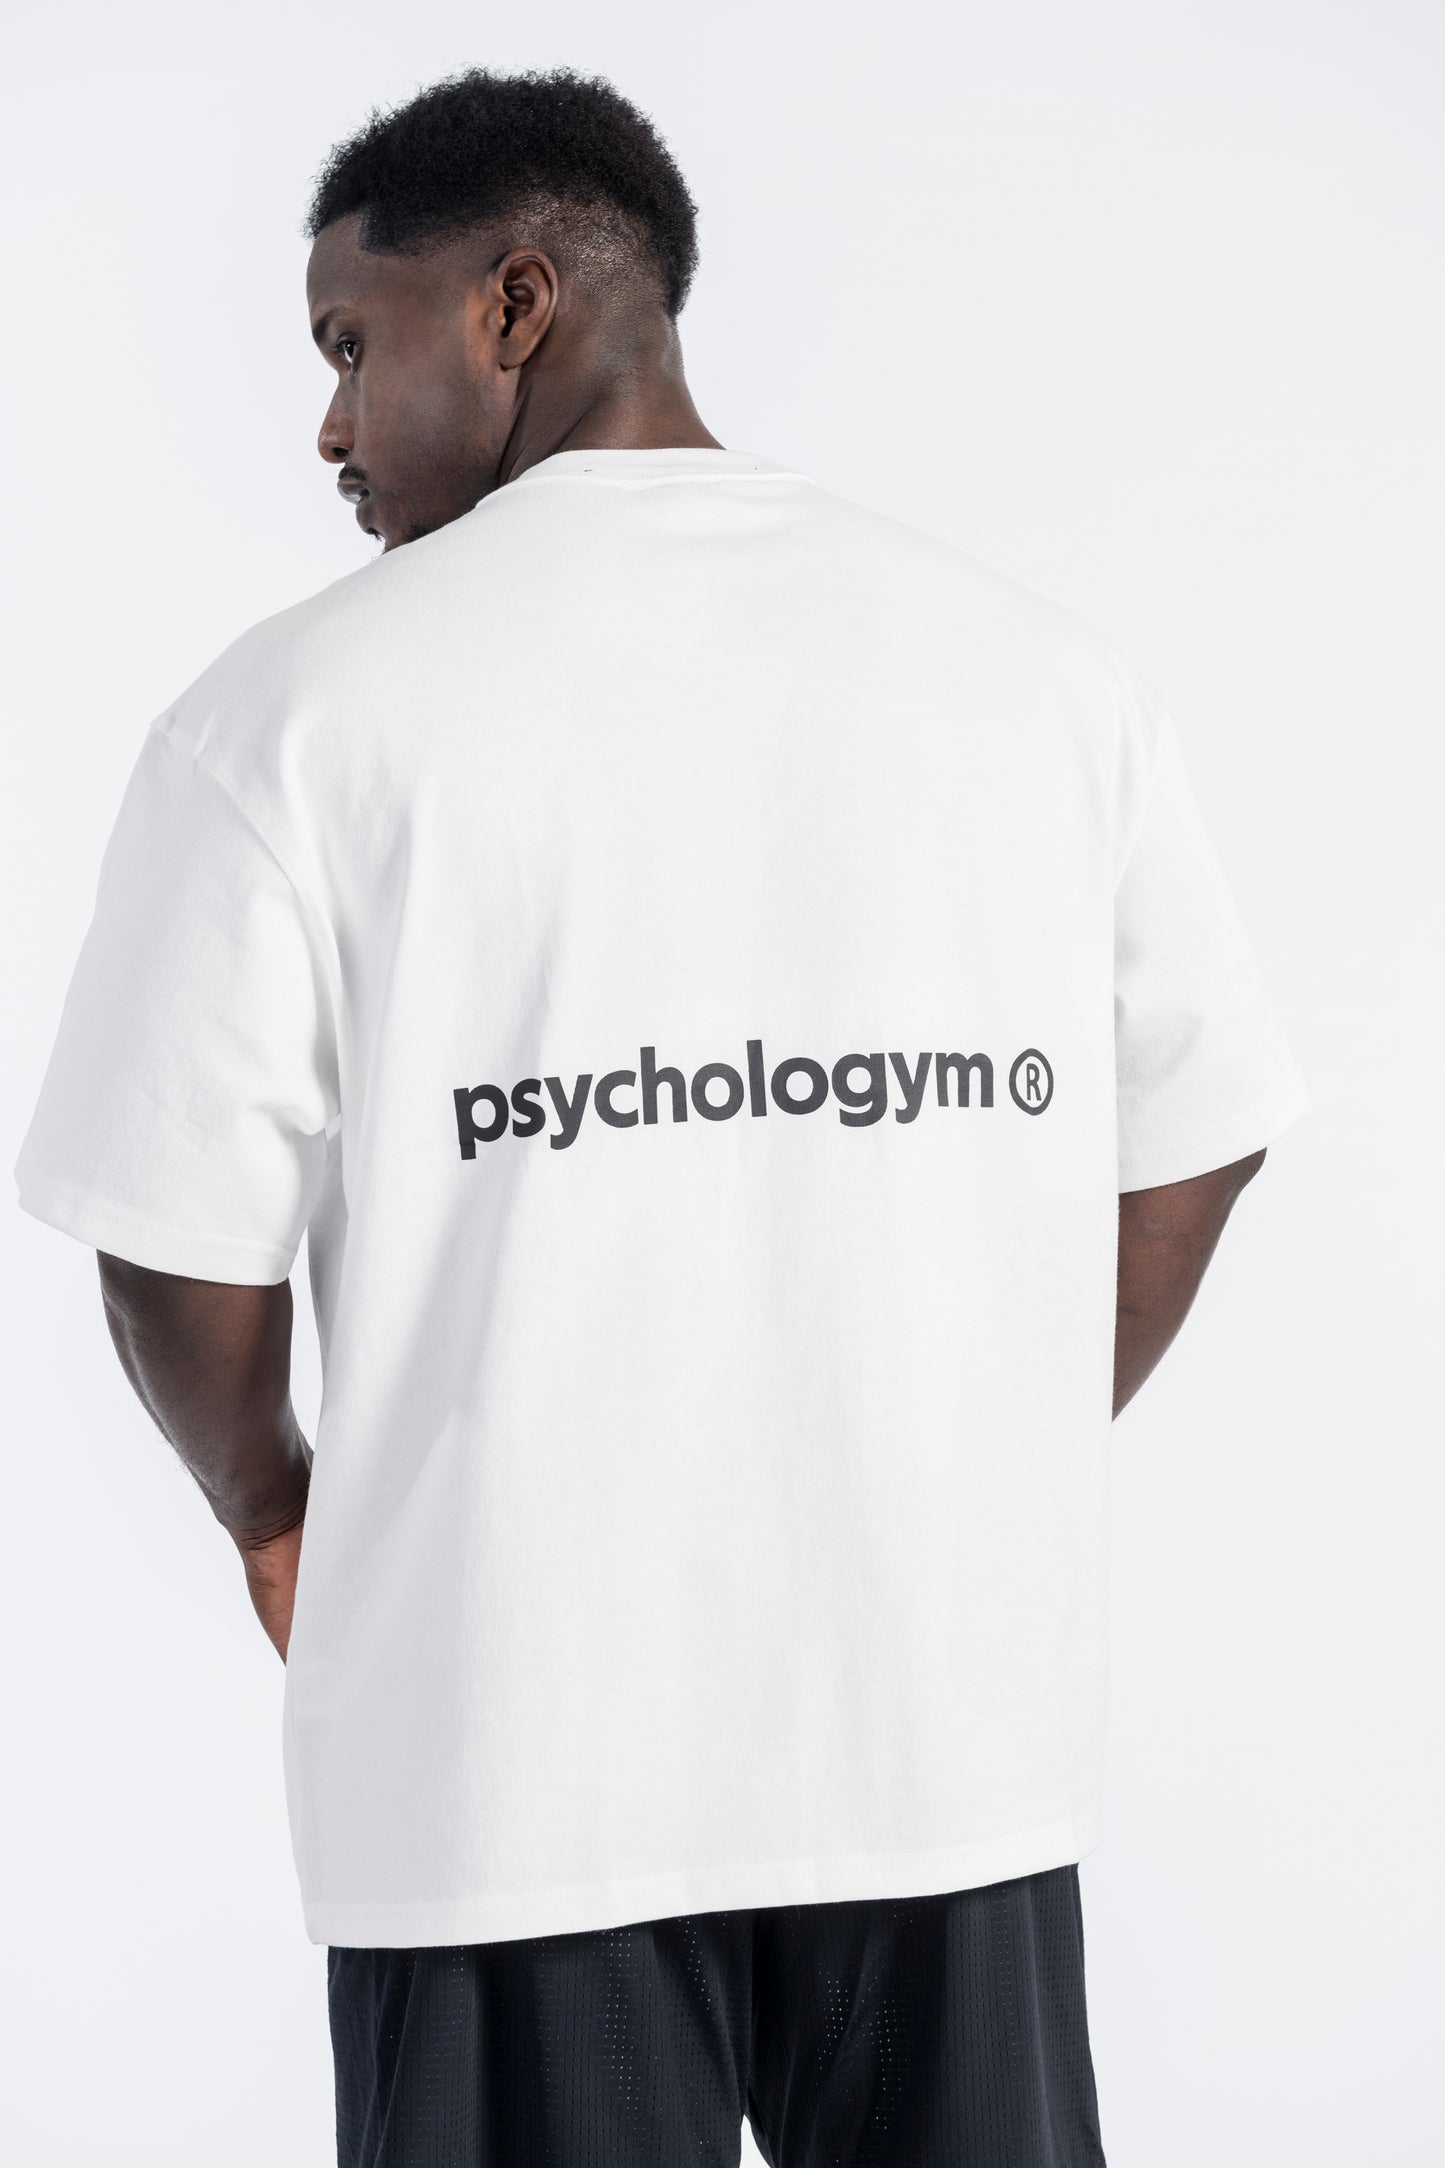 Camiseta oversize psychologym® collection.